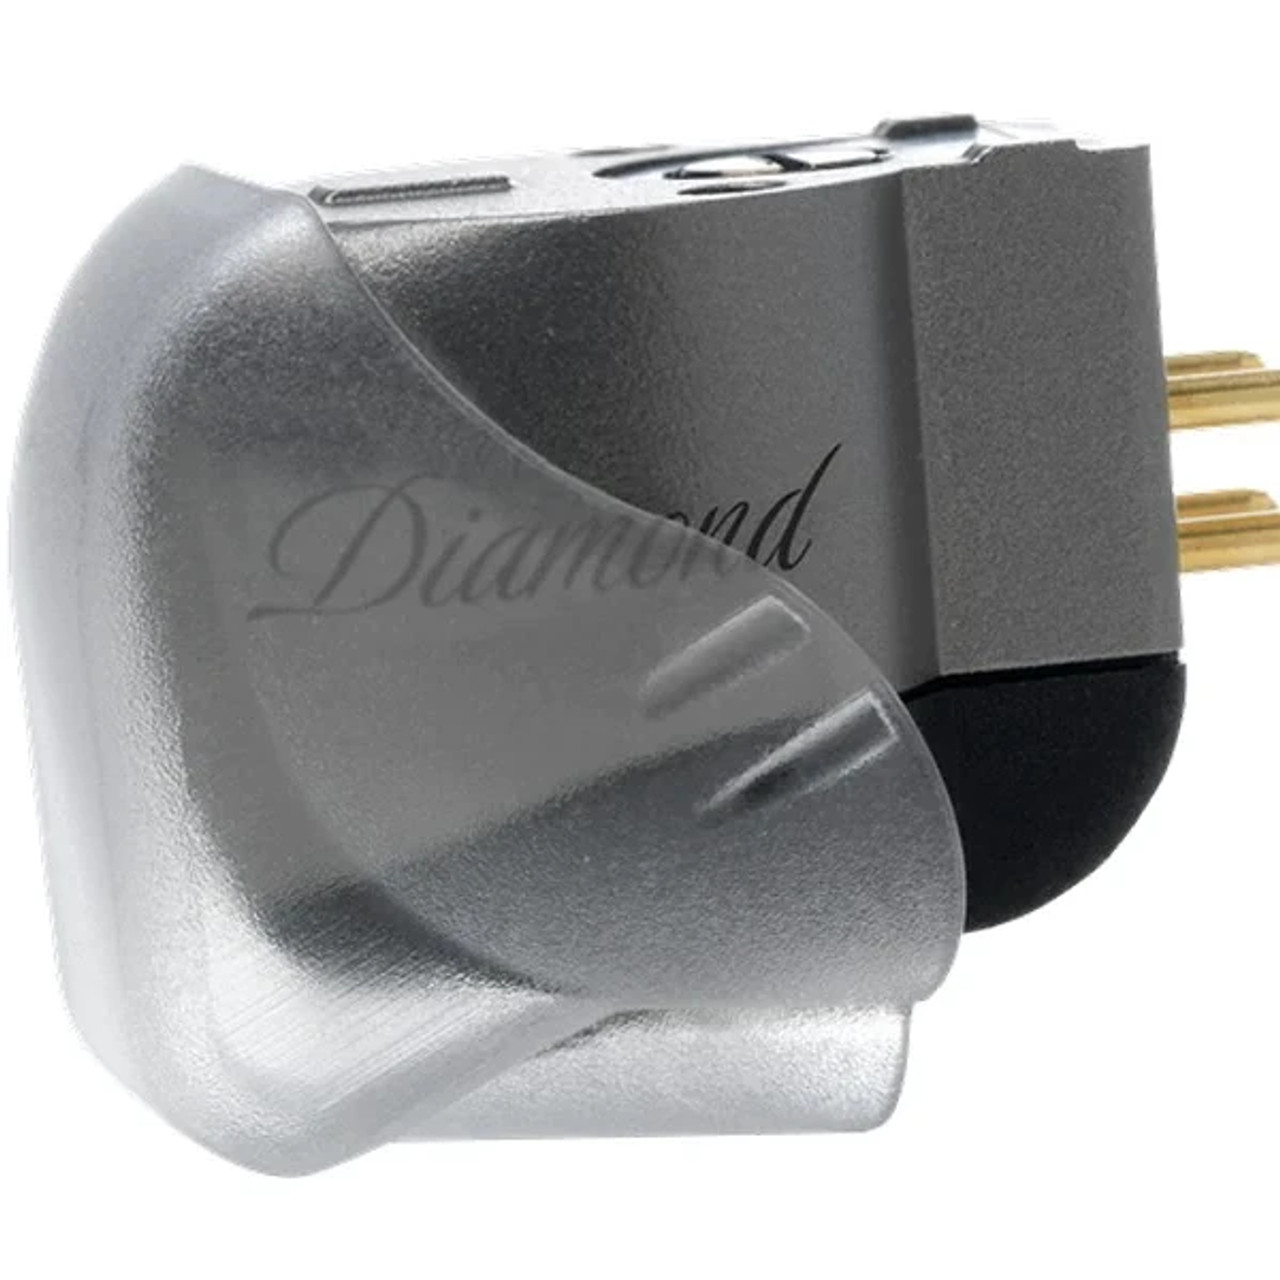 Ortofon MC Diamond MC cartridge